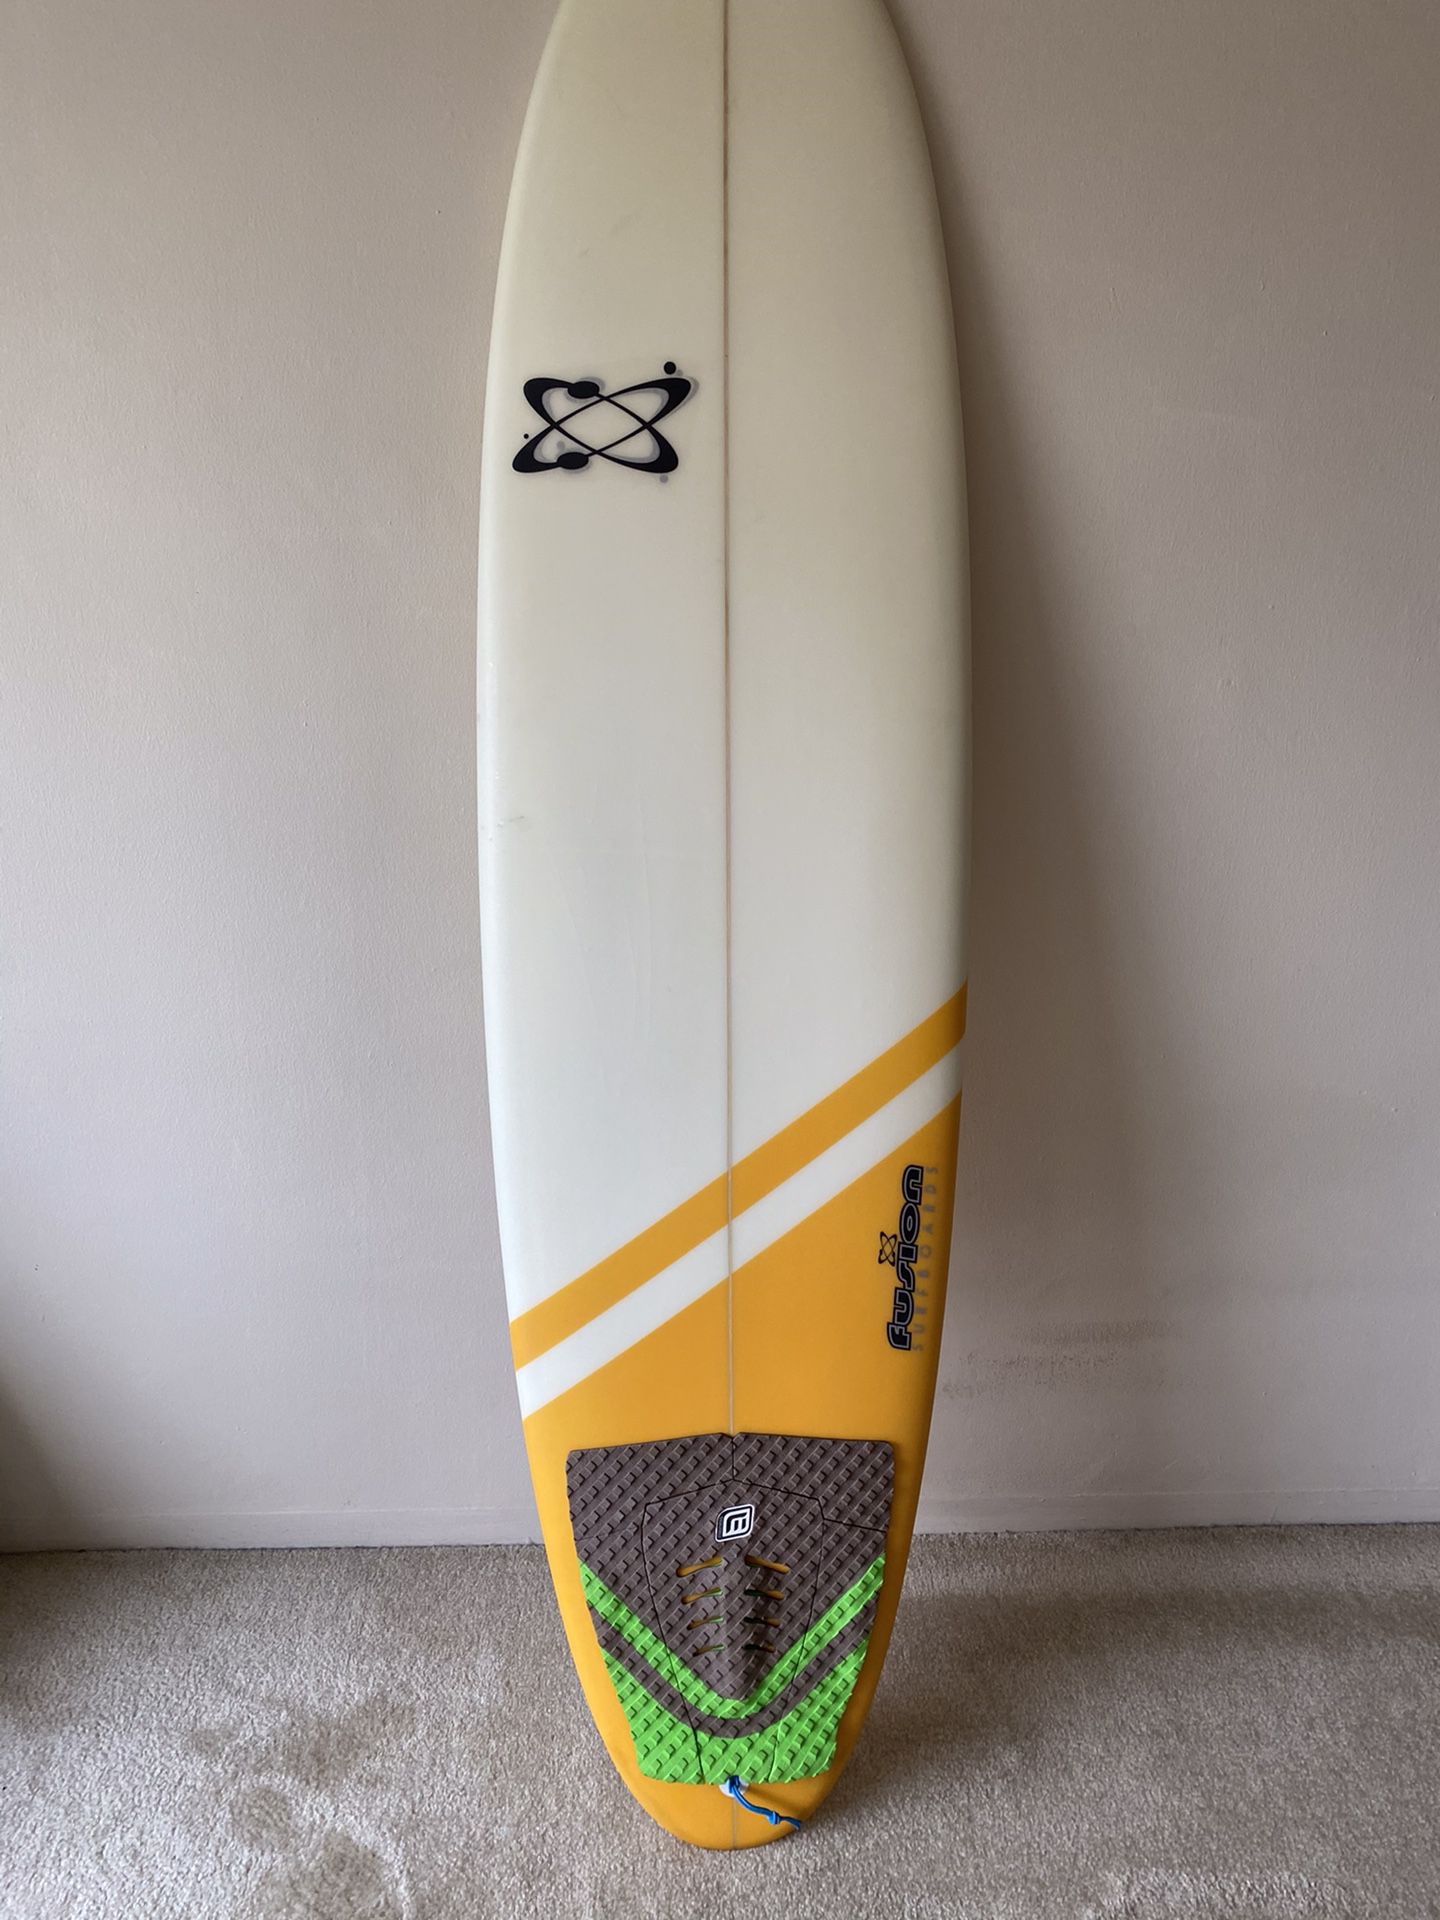 Surfboard fusion intermediate 6’8” like new